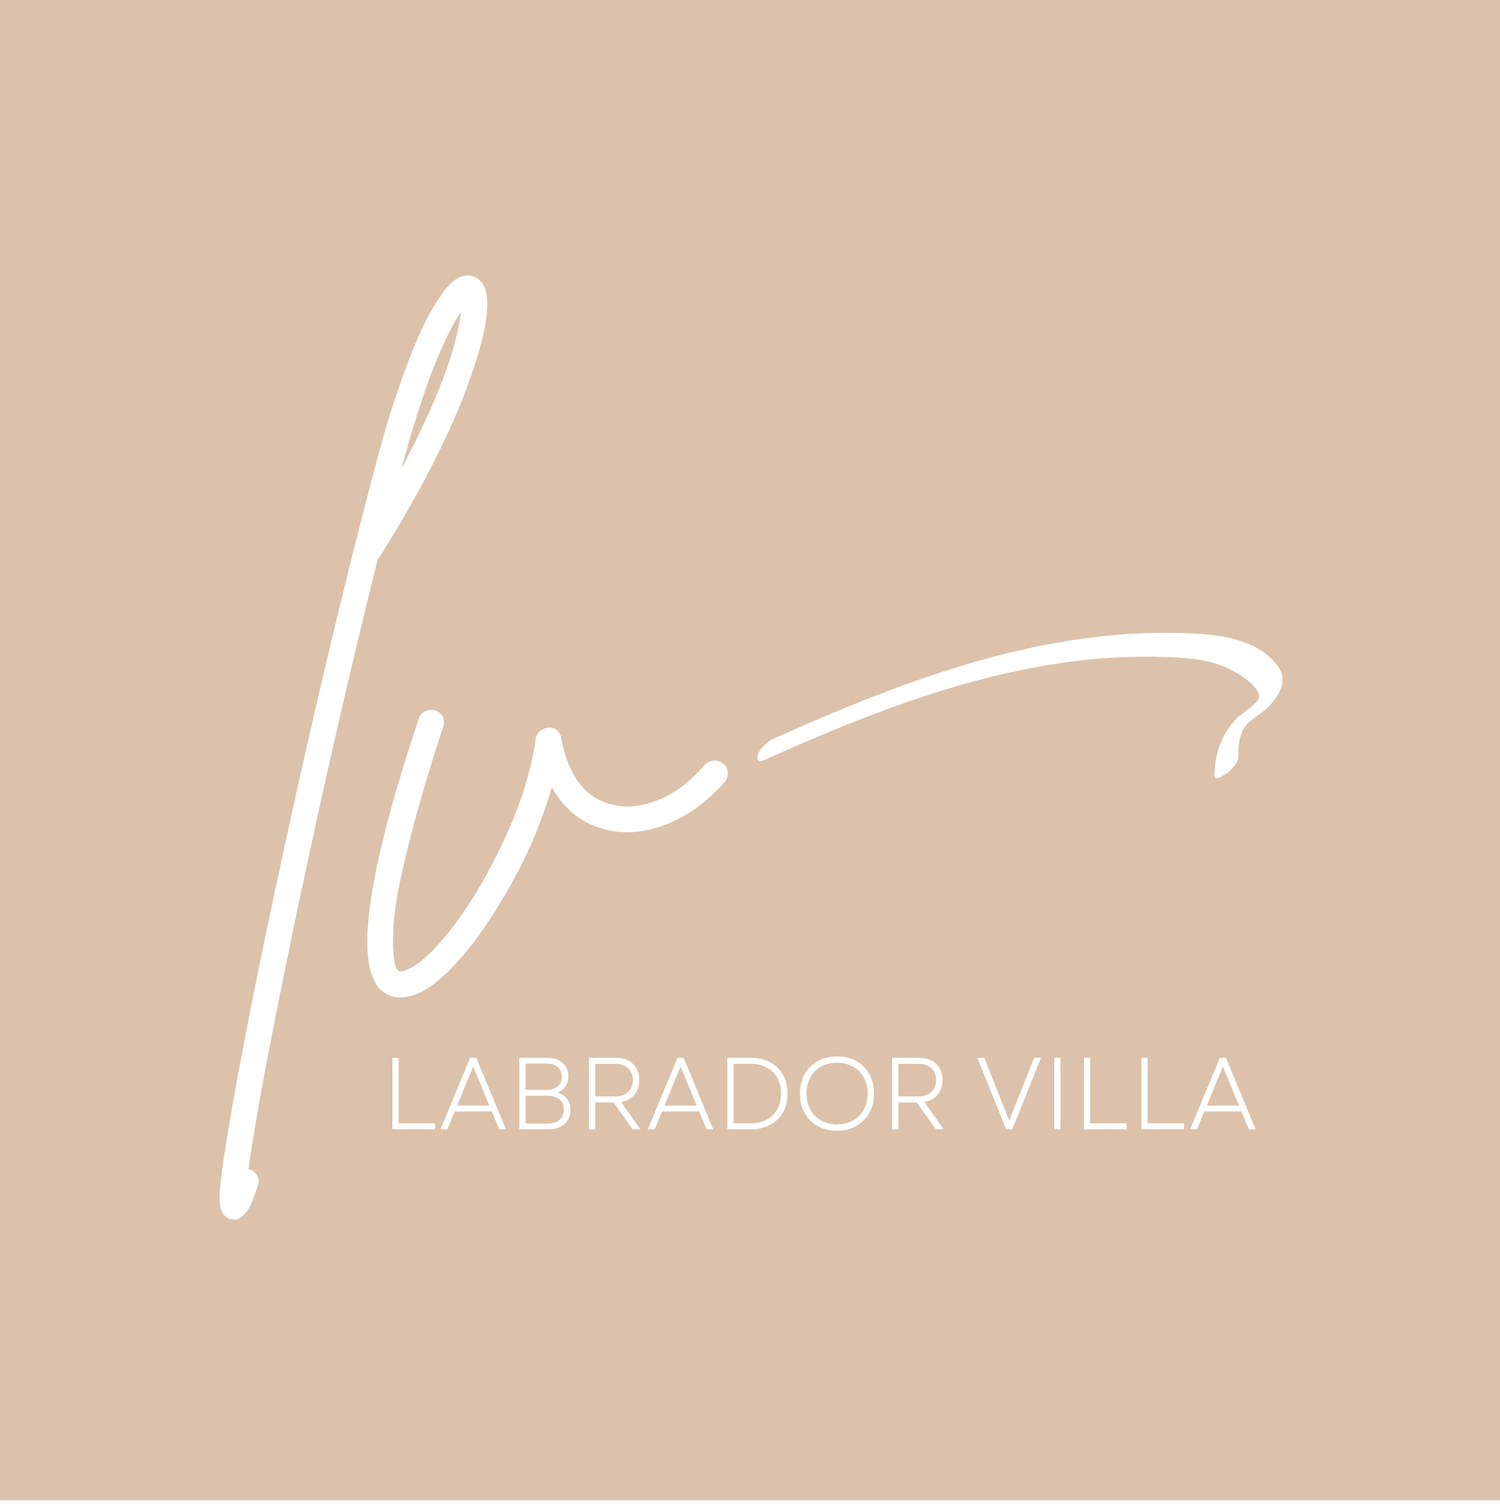 Labrador Villa